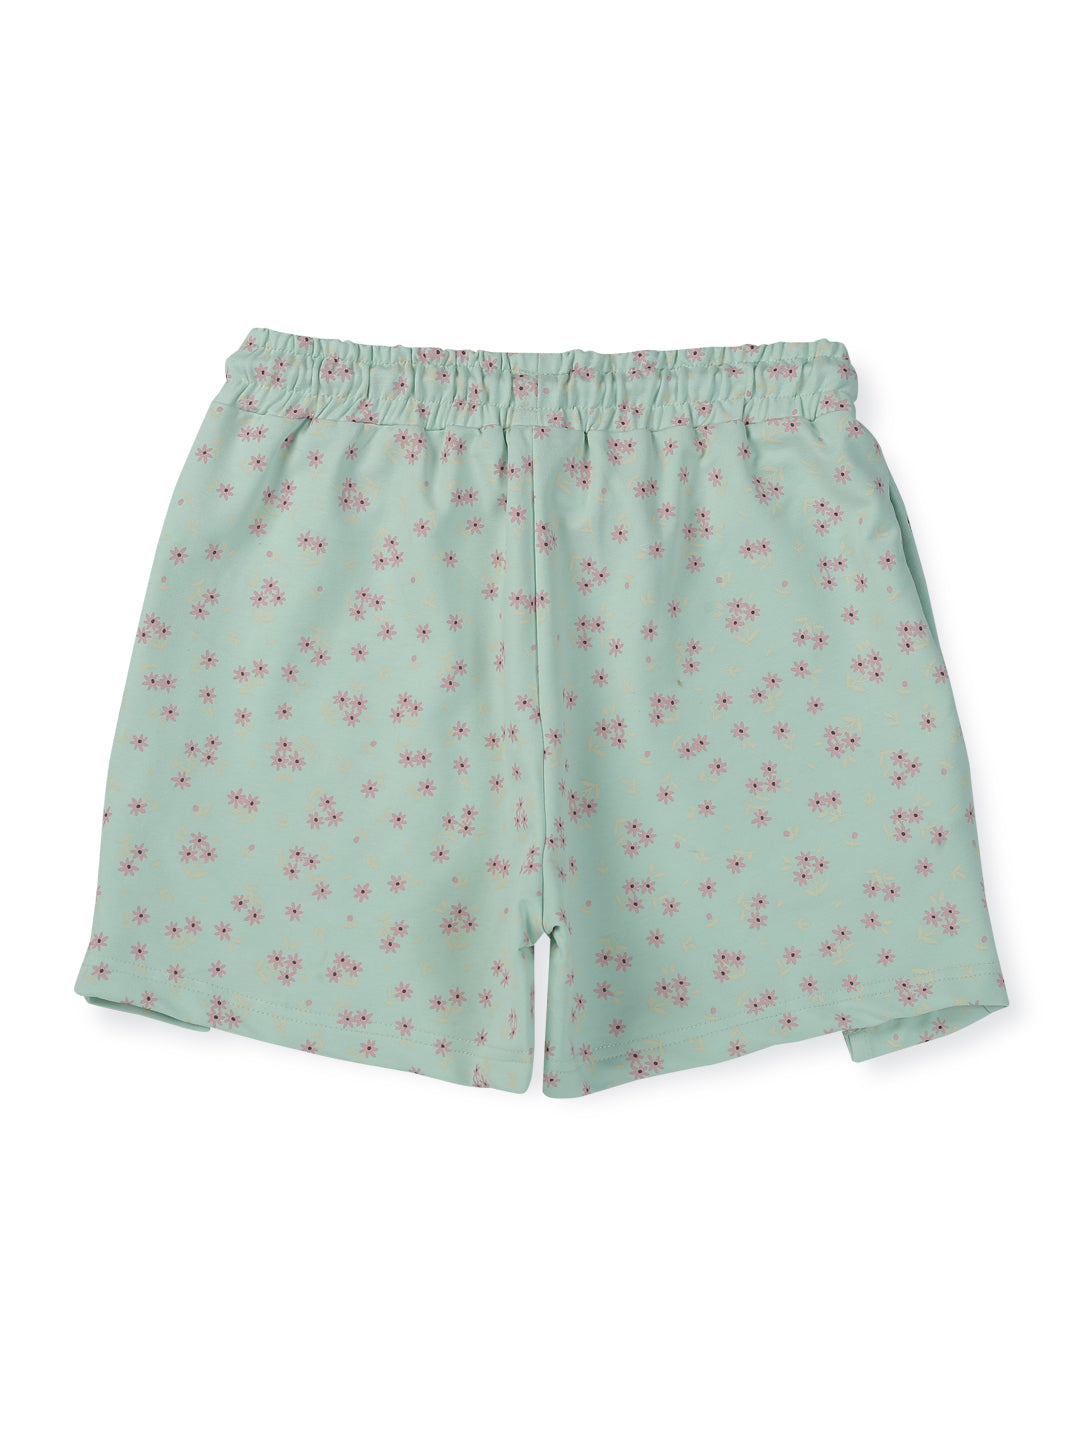 Girls Light Green Cotton Printed Shorts